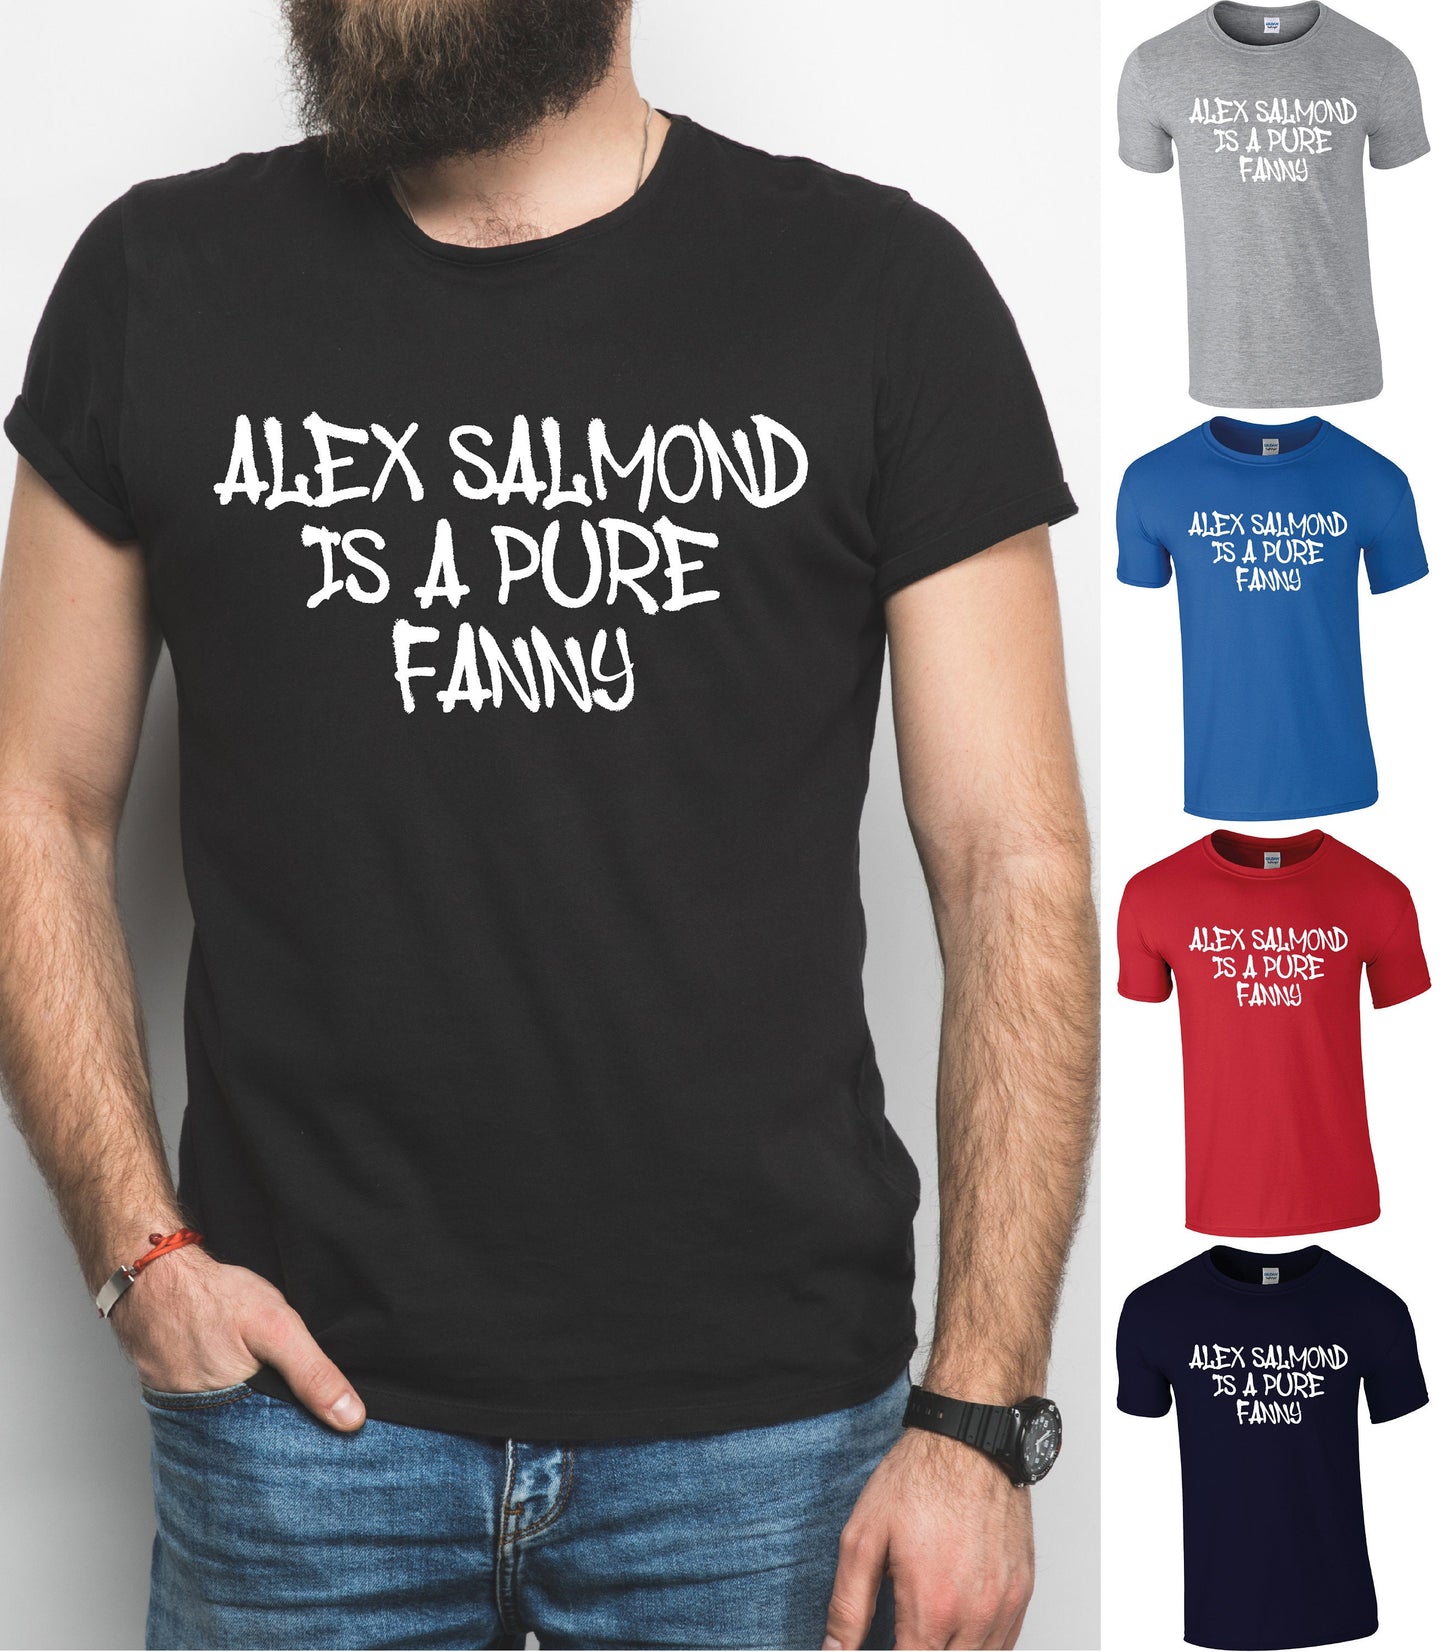 Alex Salmond is a Pure Fanny T-Shirt - Funny Joke Scottish Humour Tee Graffiti Slogan